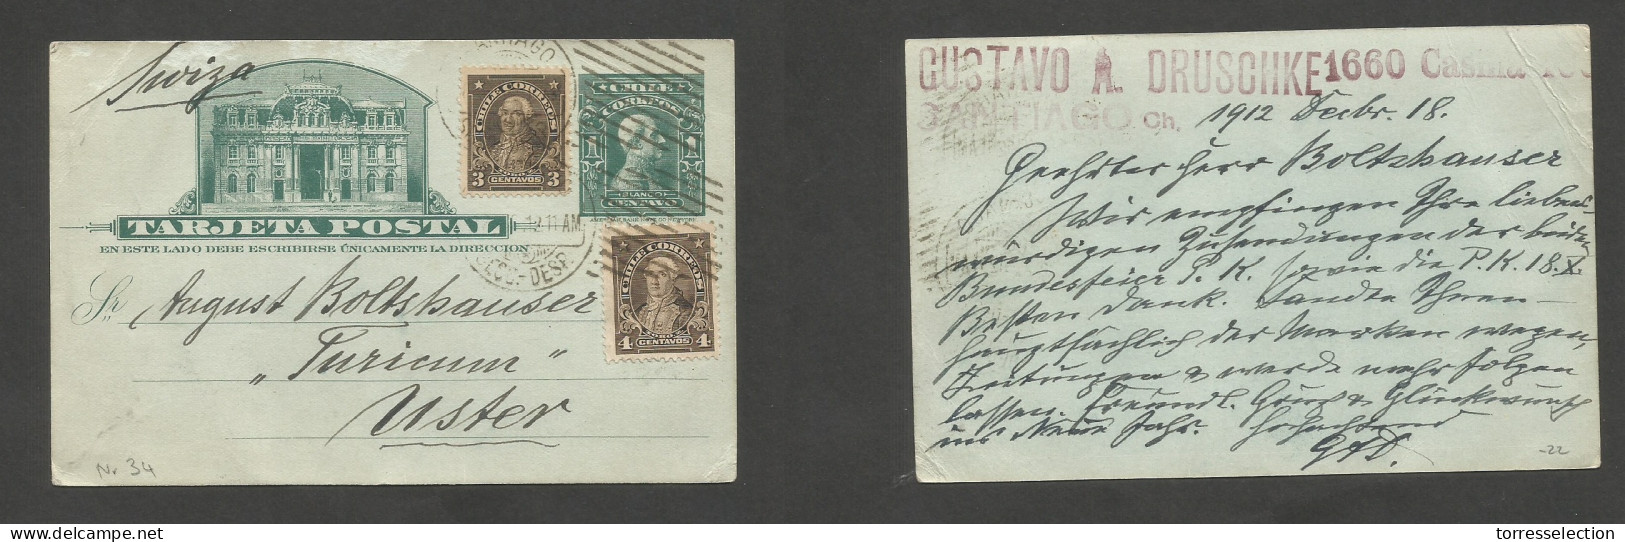 CHILE - Stationery. 1912 (18 Dec) Stgo - Switzerland, Uster. 1c Green Illustr Stat Card + 2 Adtls, Grill Cds. - Chile